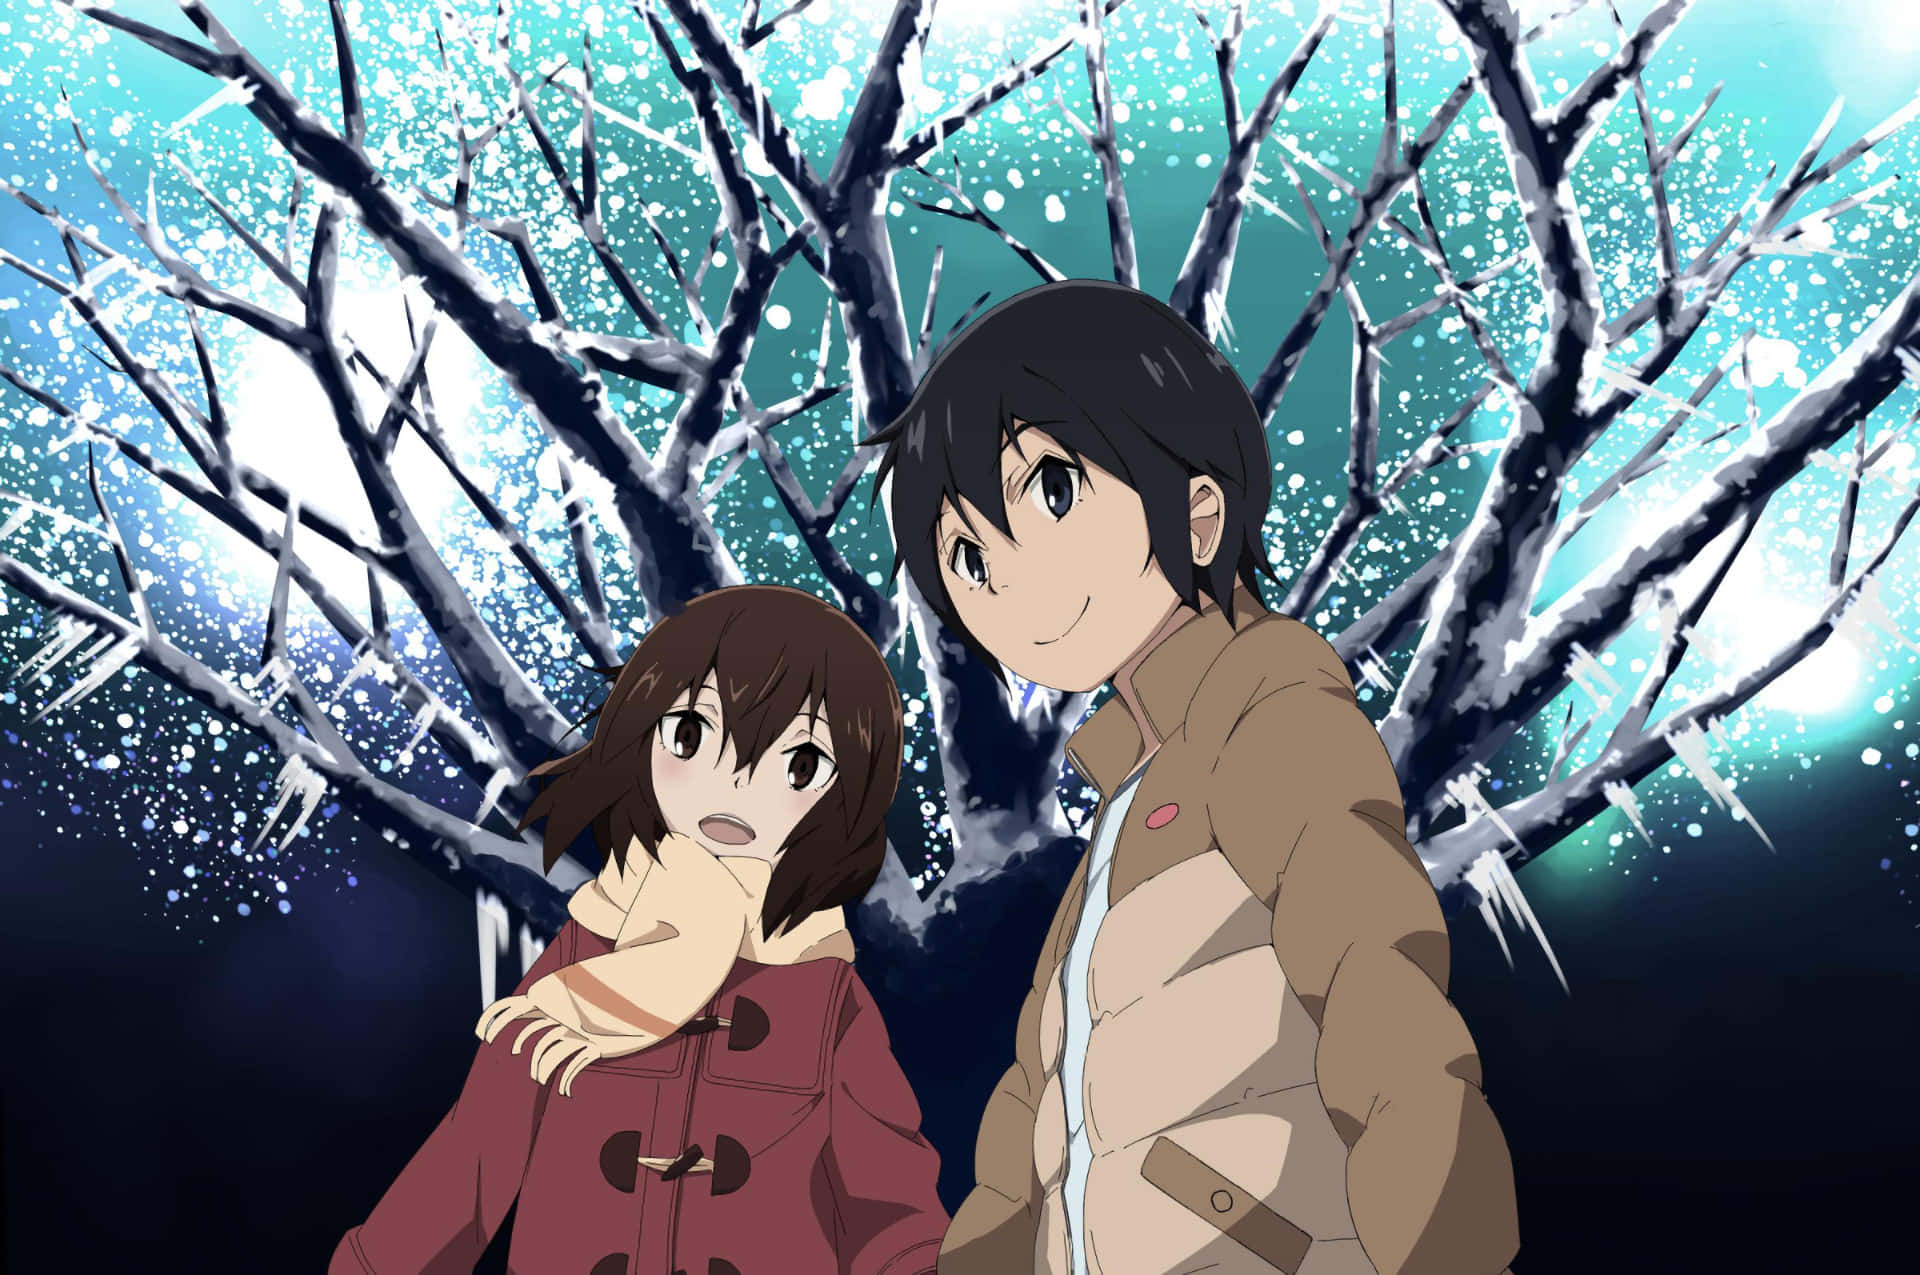 Erased opening | Anime, Good anime series, Anime shows